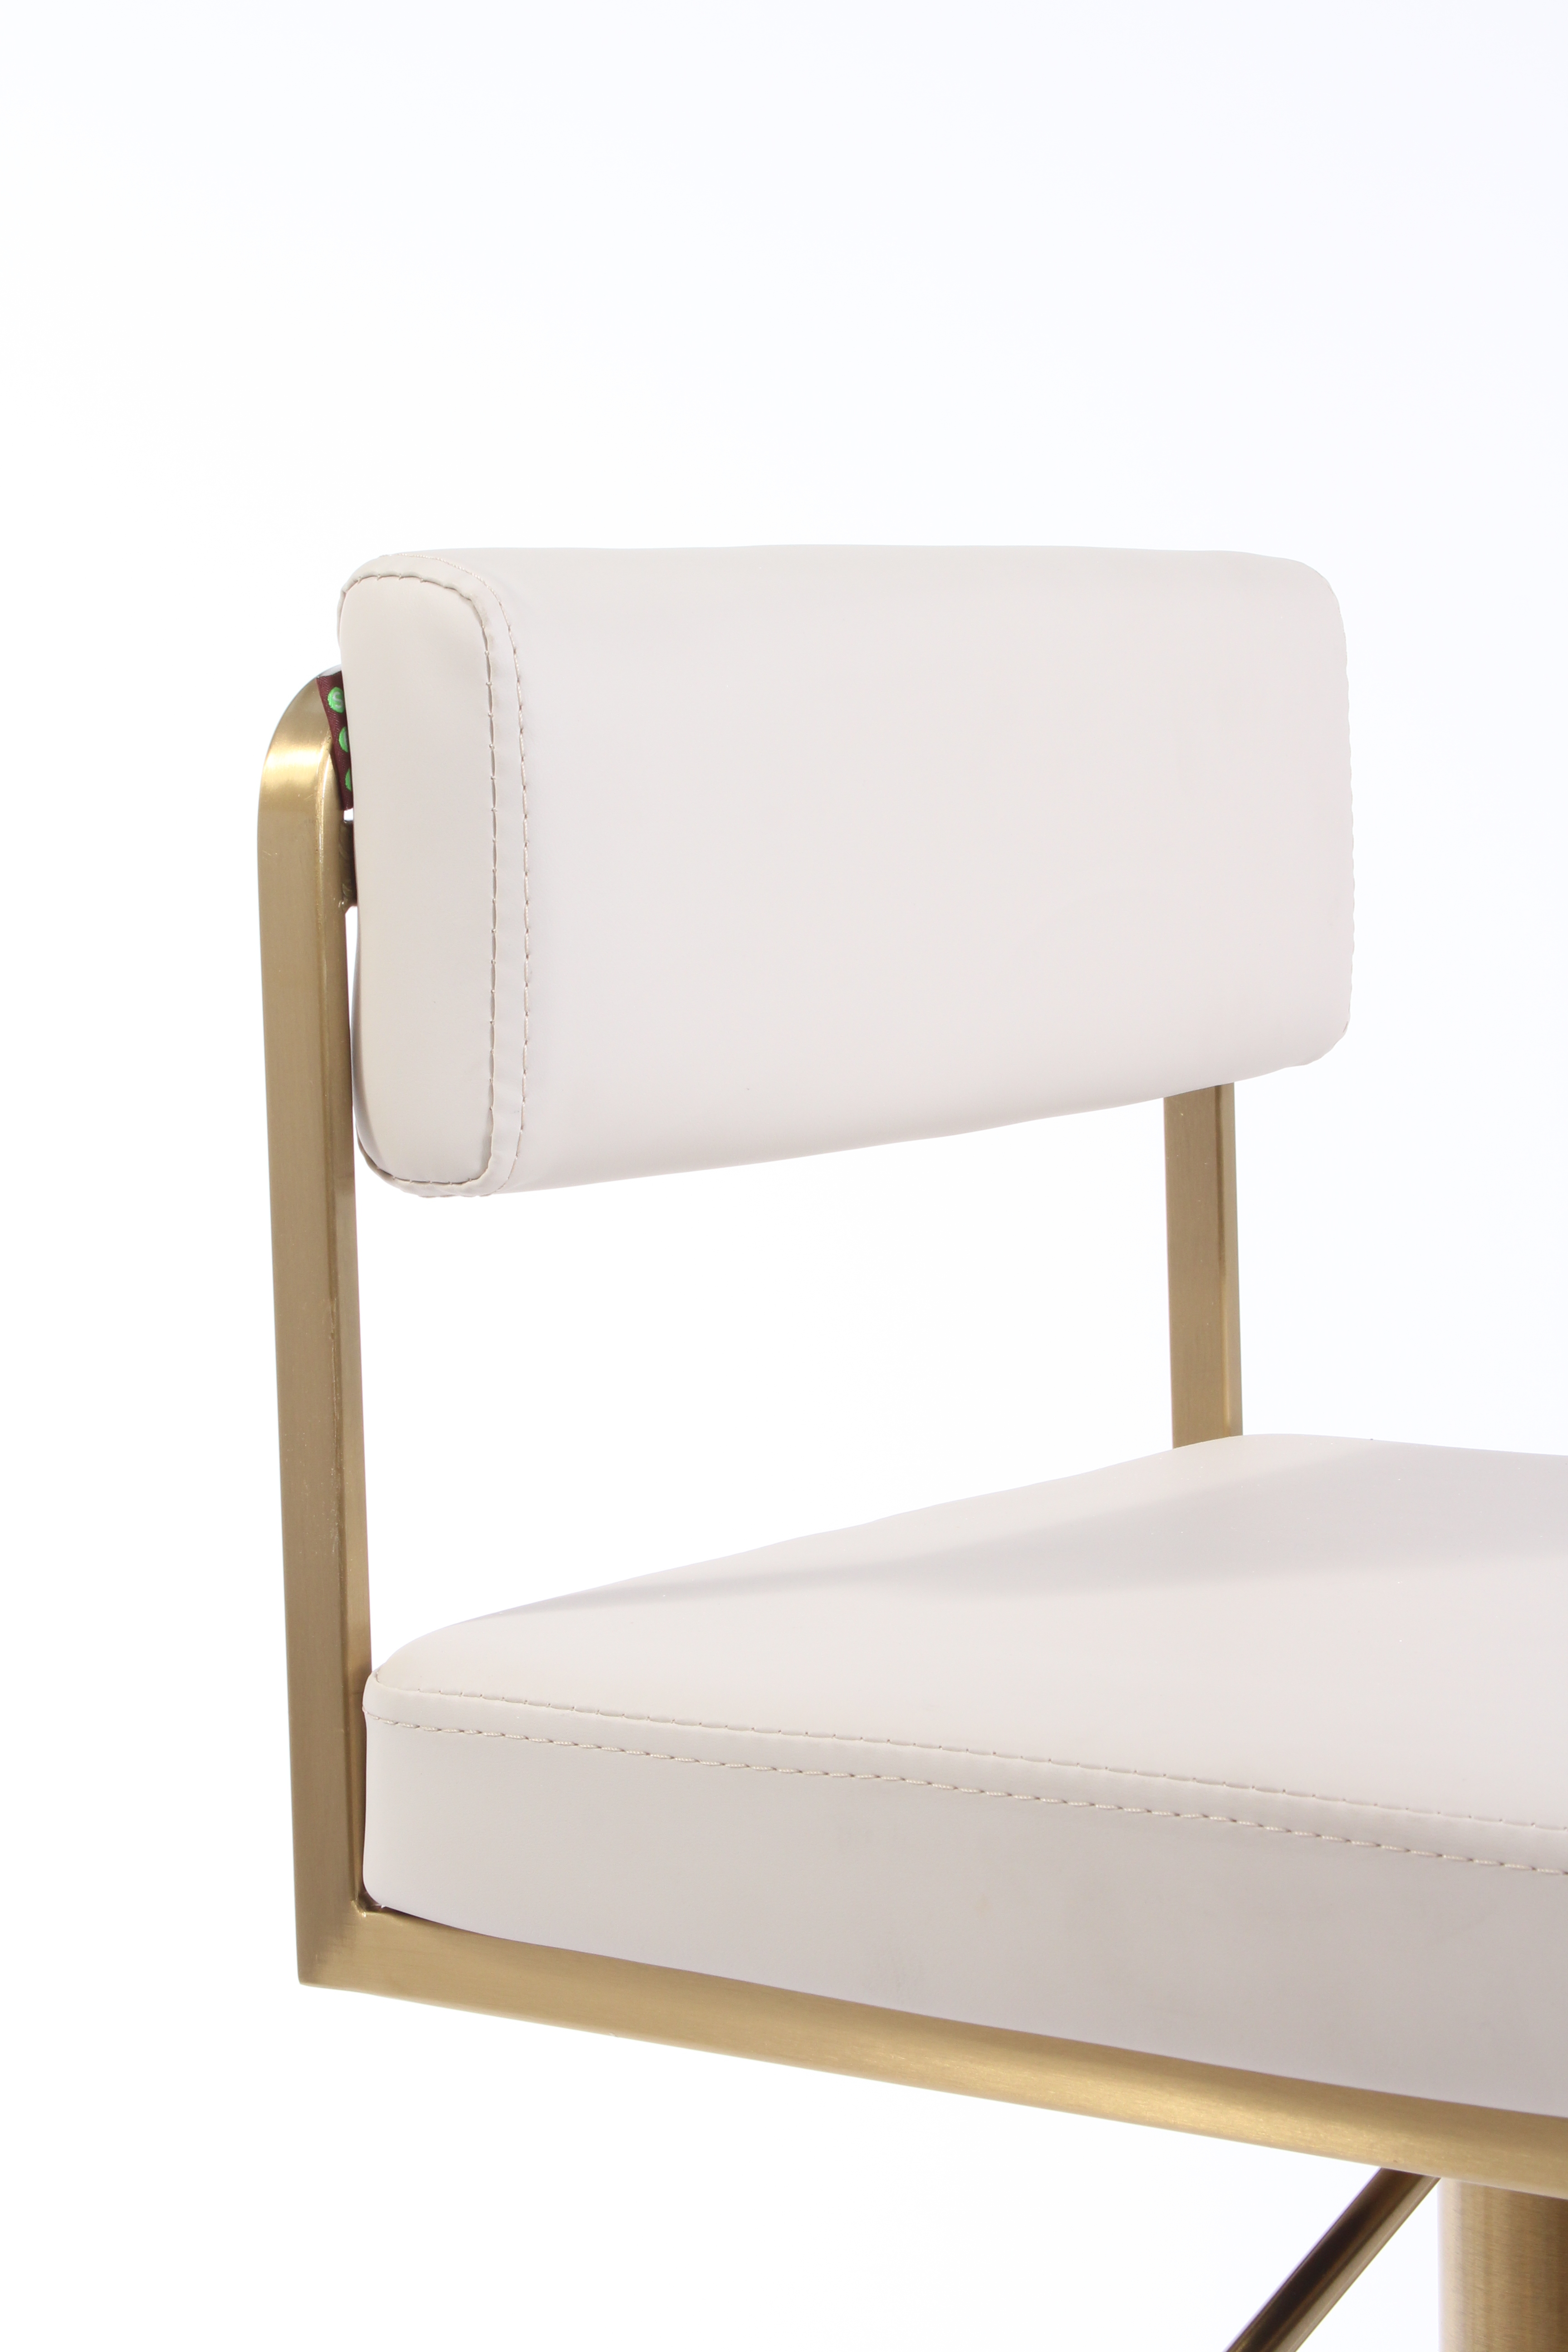 The Lotti Salon Stool with Backrest  - Ivory & Gold by SEC